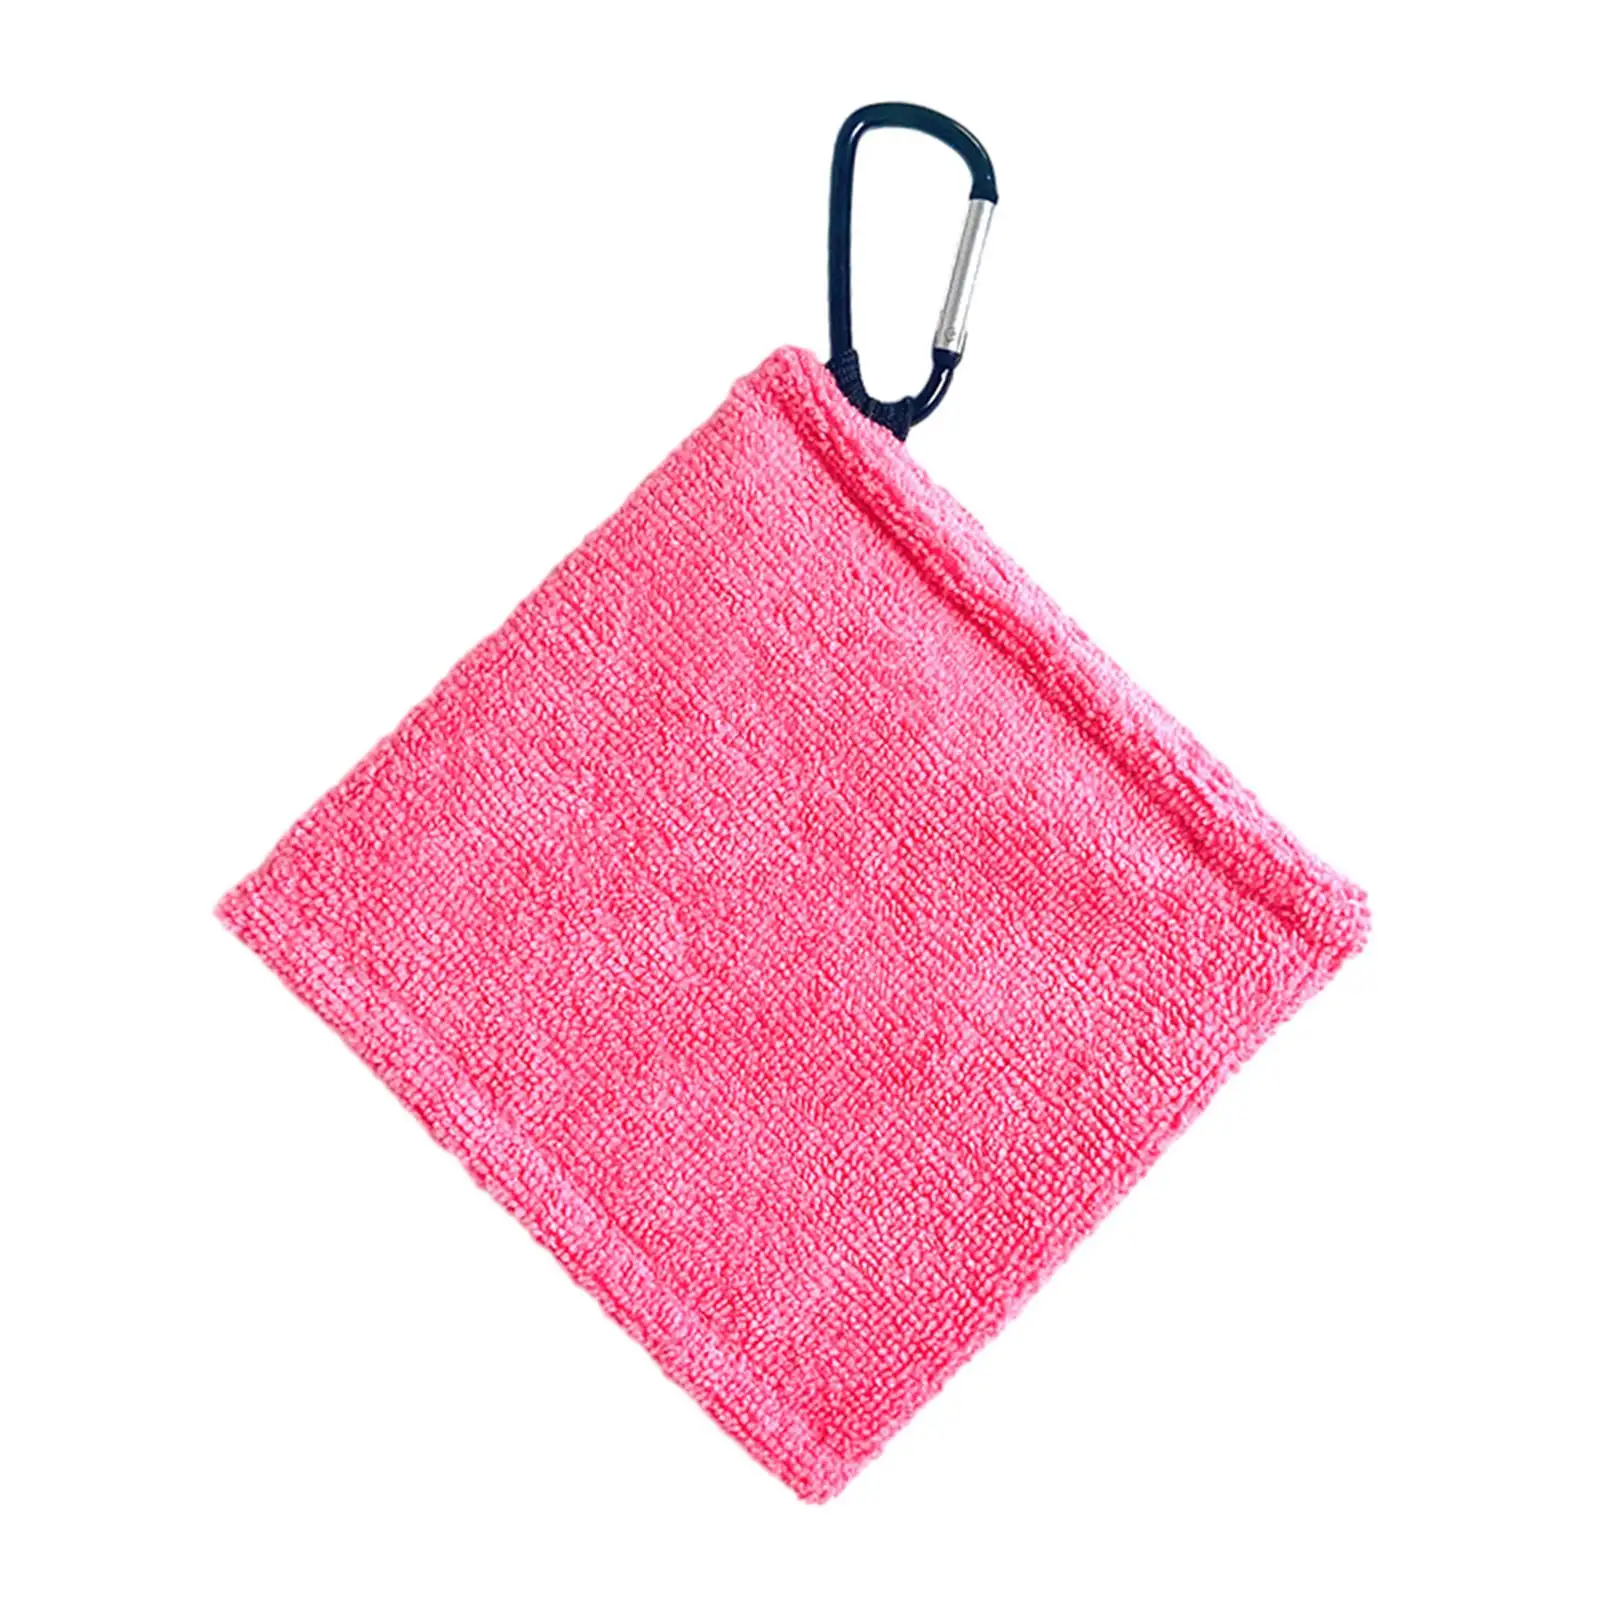 Golf Ball Towel Small Portable Microfiber 5.5 x 5.5 inch Wiping Cloth Golf Ball